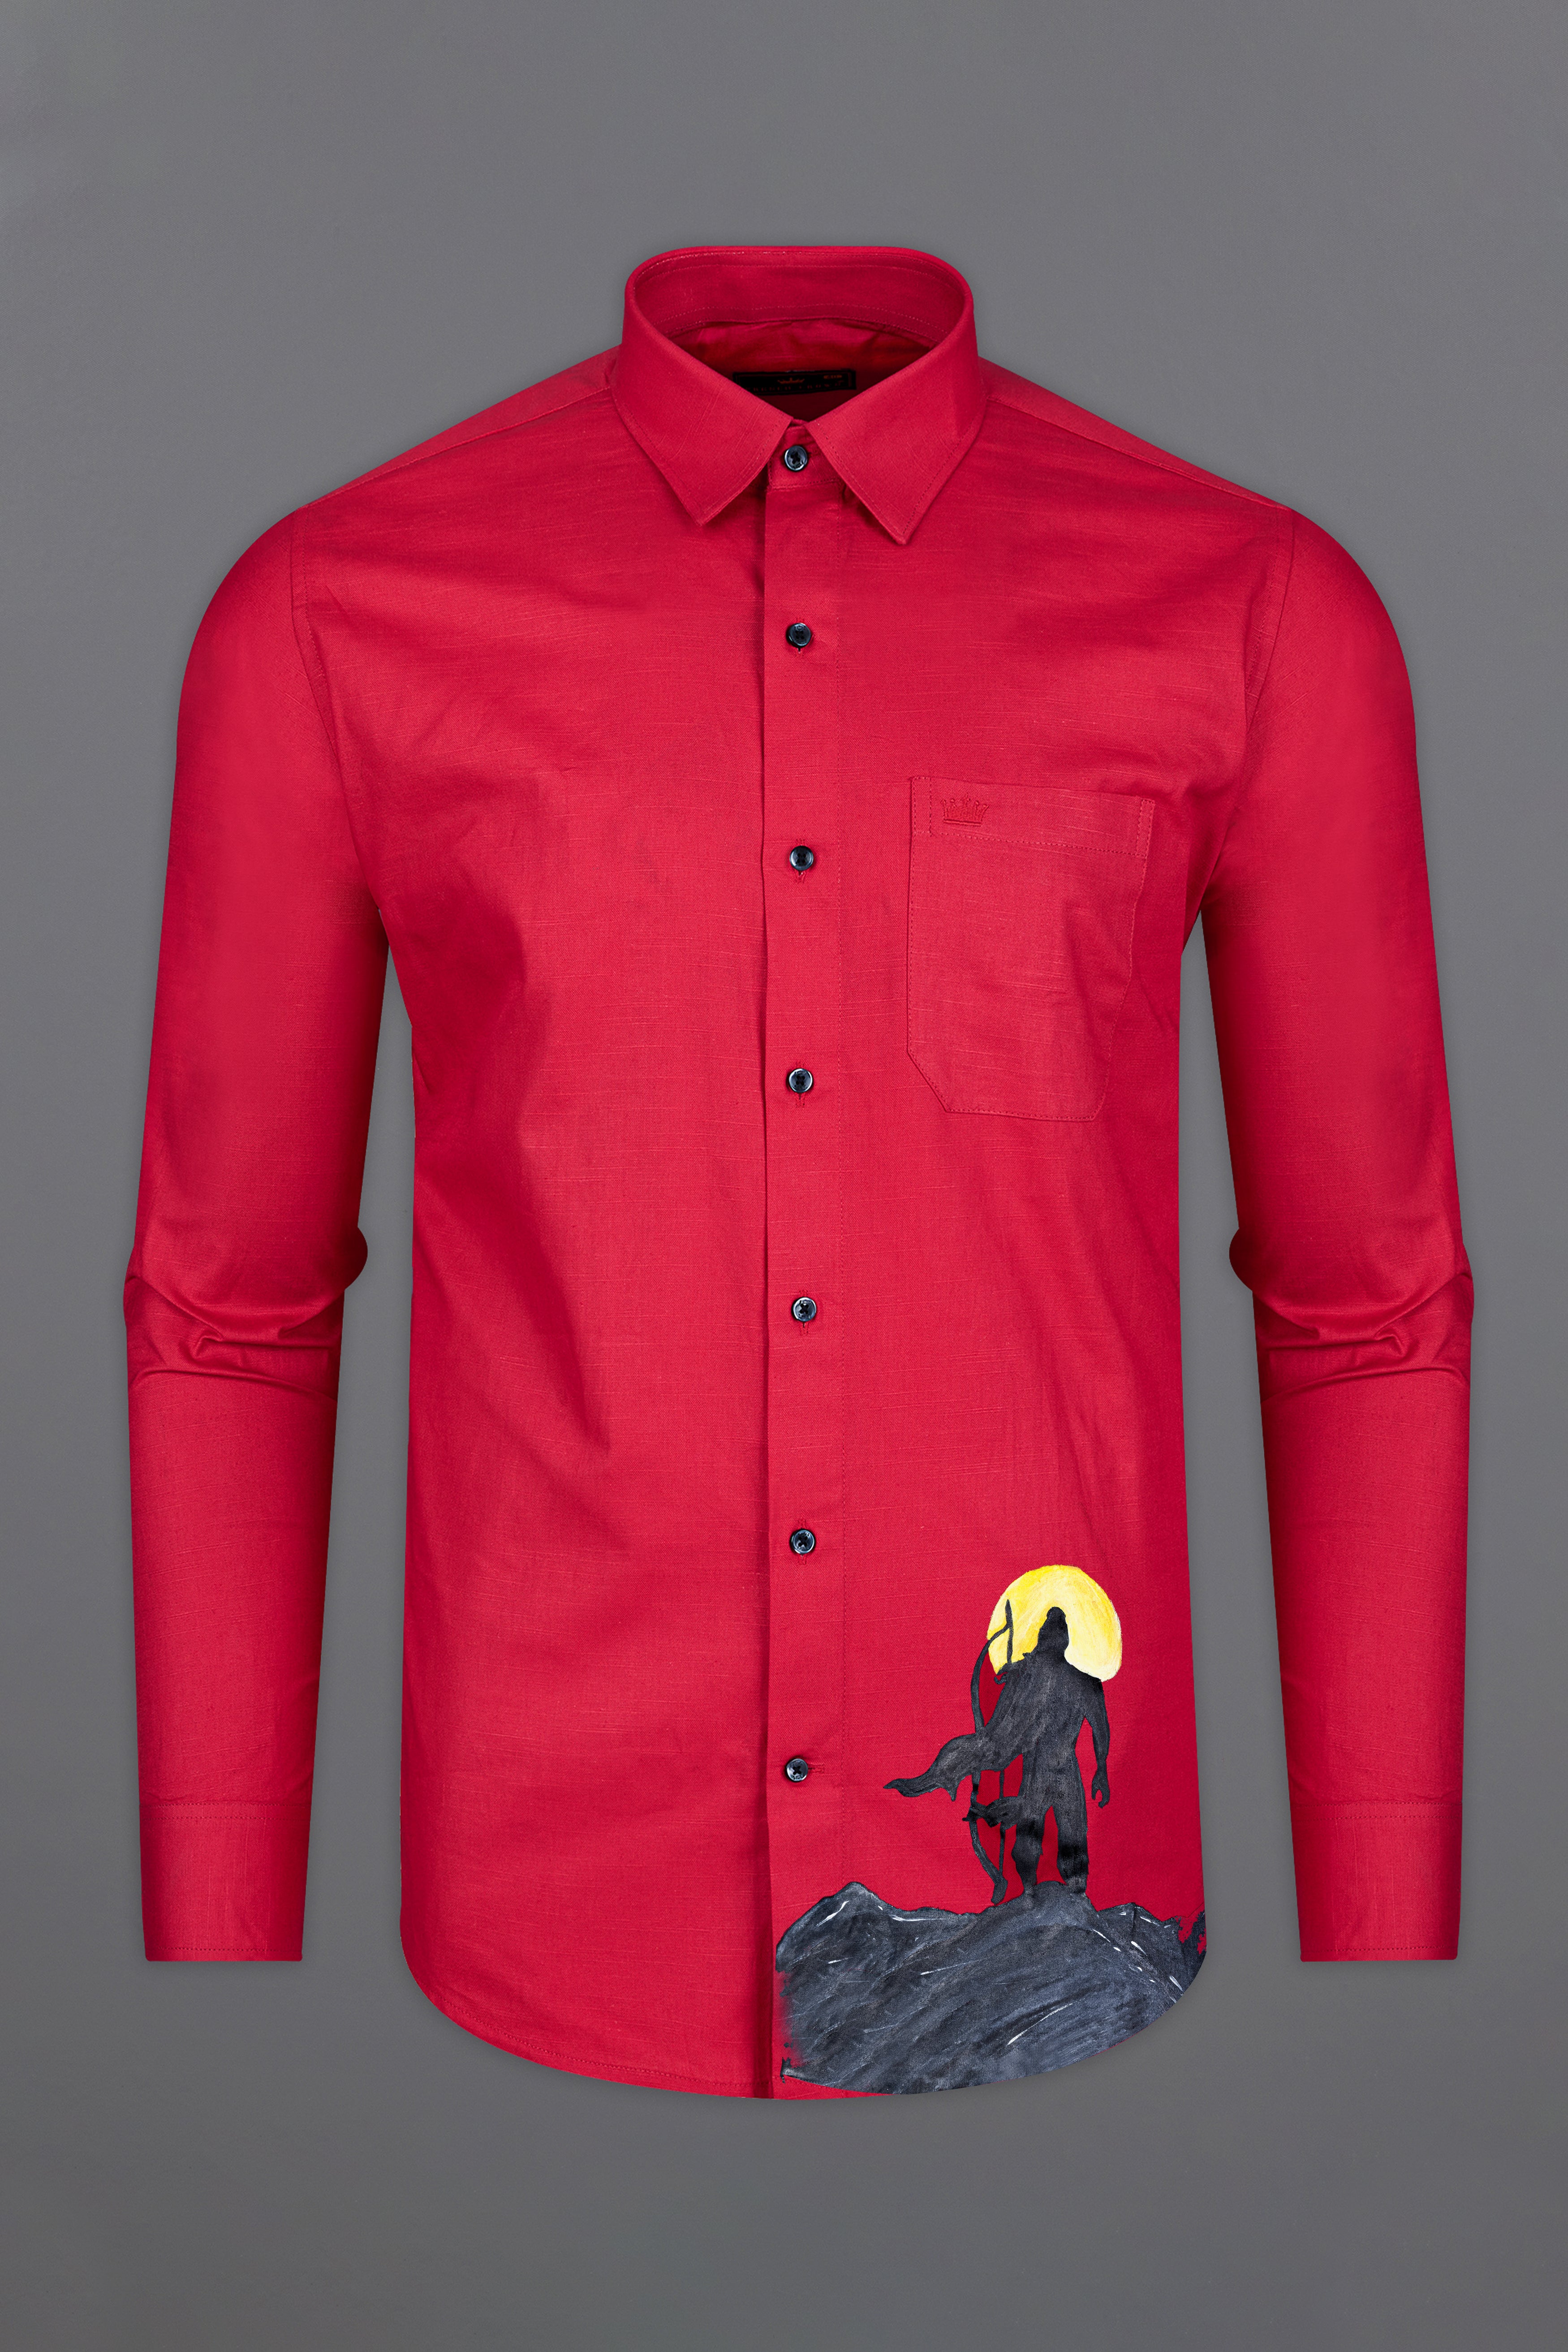 Carmine Red Lord Ram Hand Painted Luxurious Linen Designer Shirt